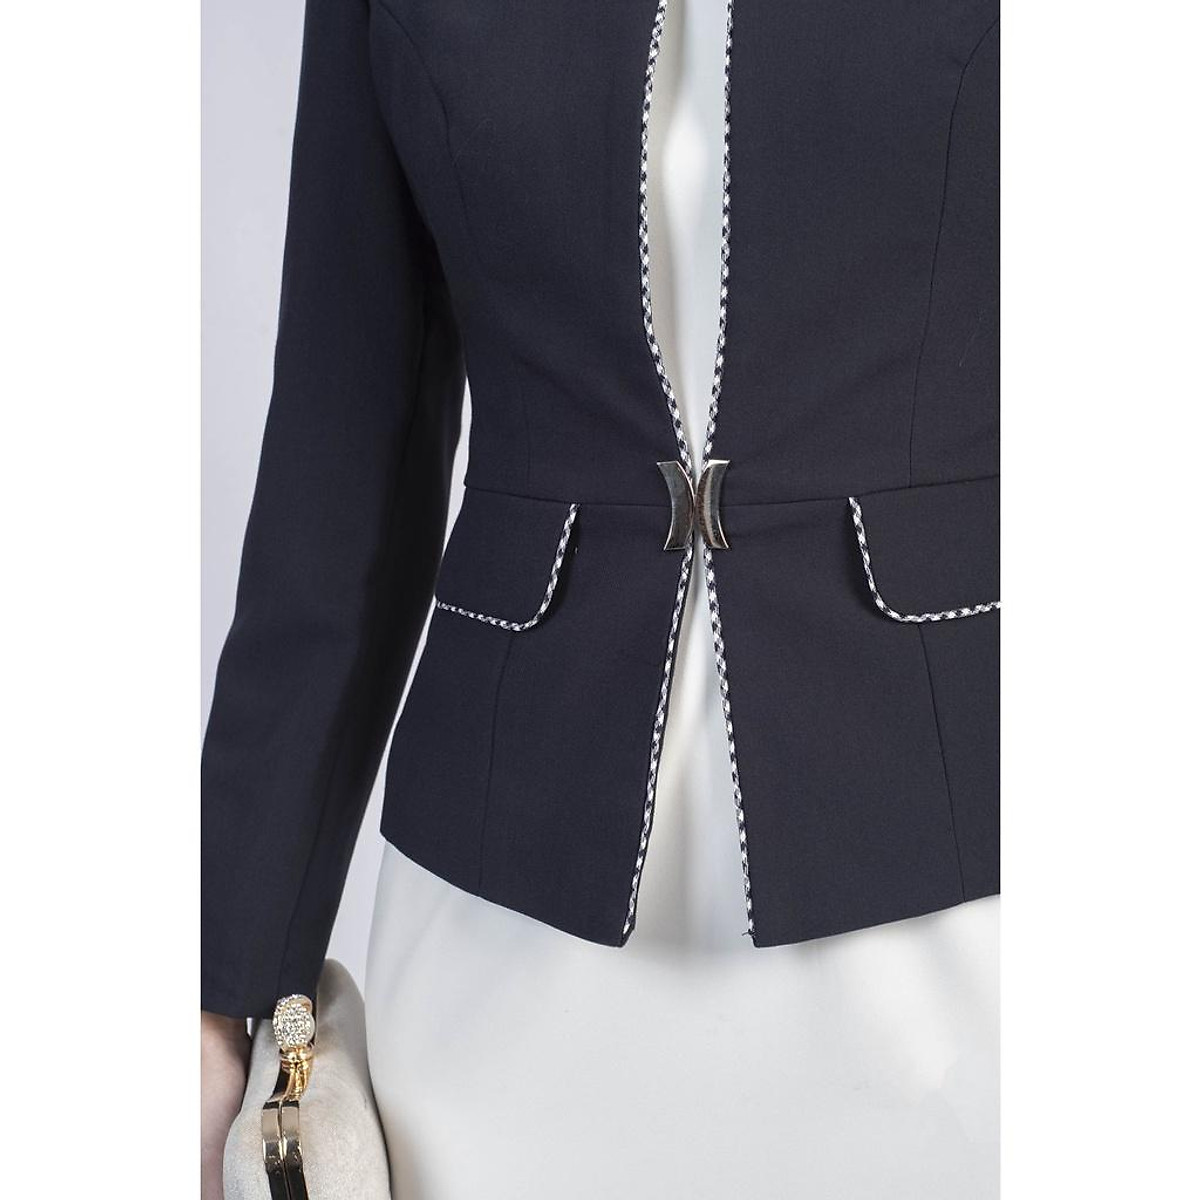 Áo vest cổ tròn MMOutfit V0820141 - Áo vest, blazer nữ